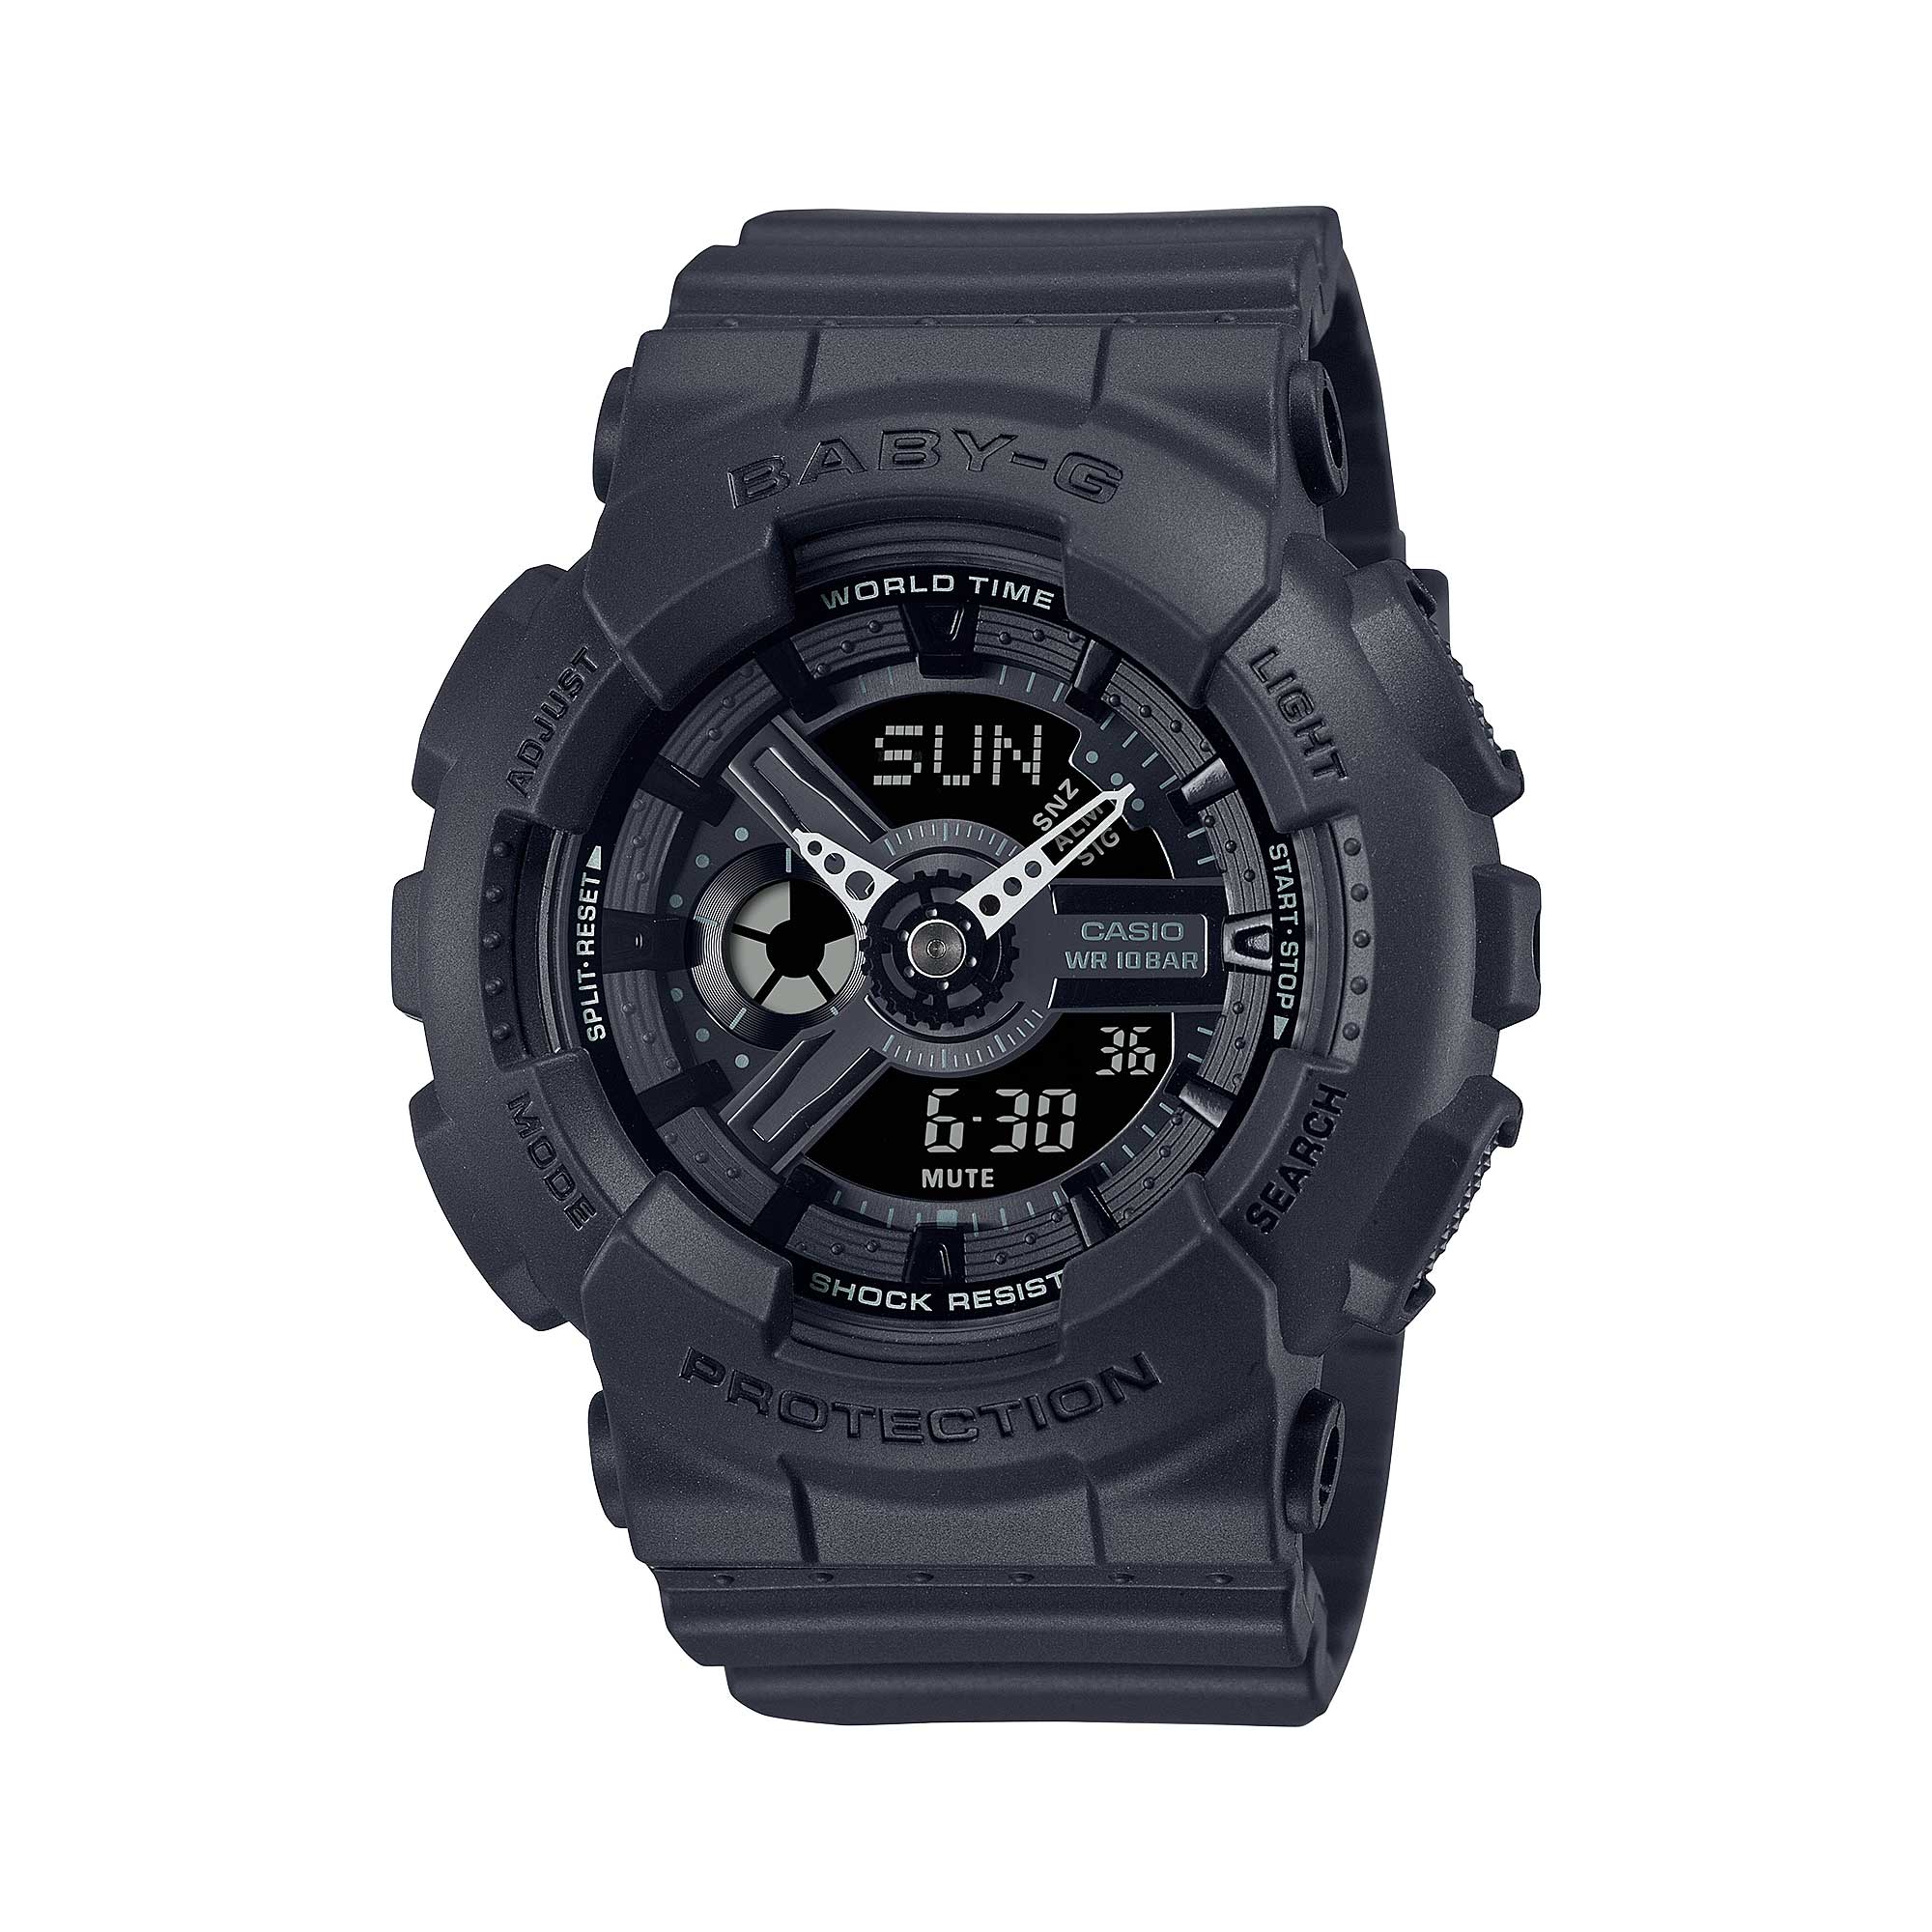 Casio Baby-G BA110 Series Black Resin Band Watch BA110BC-1A BA-110BC-1A BA110XBC-1A BA-110XBC-1A Watchspree